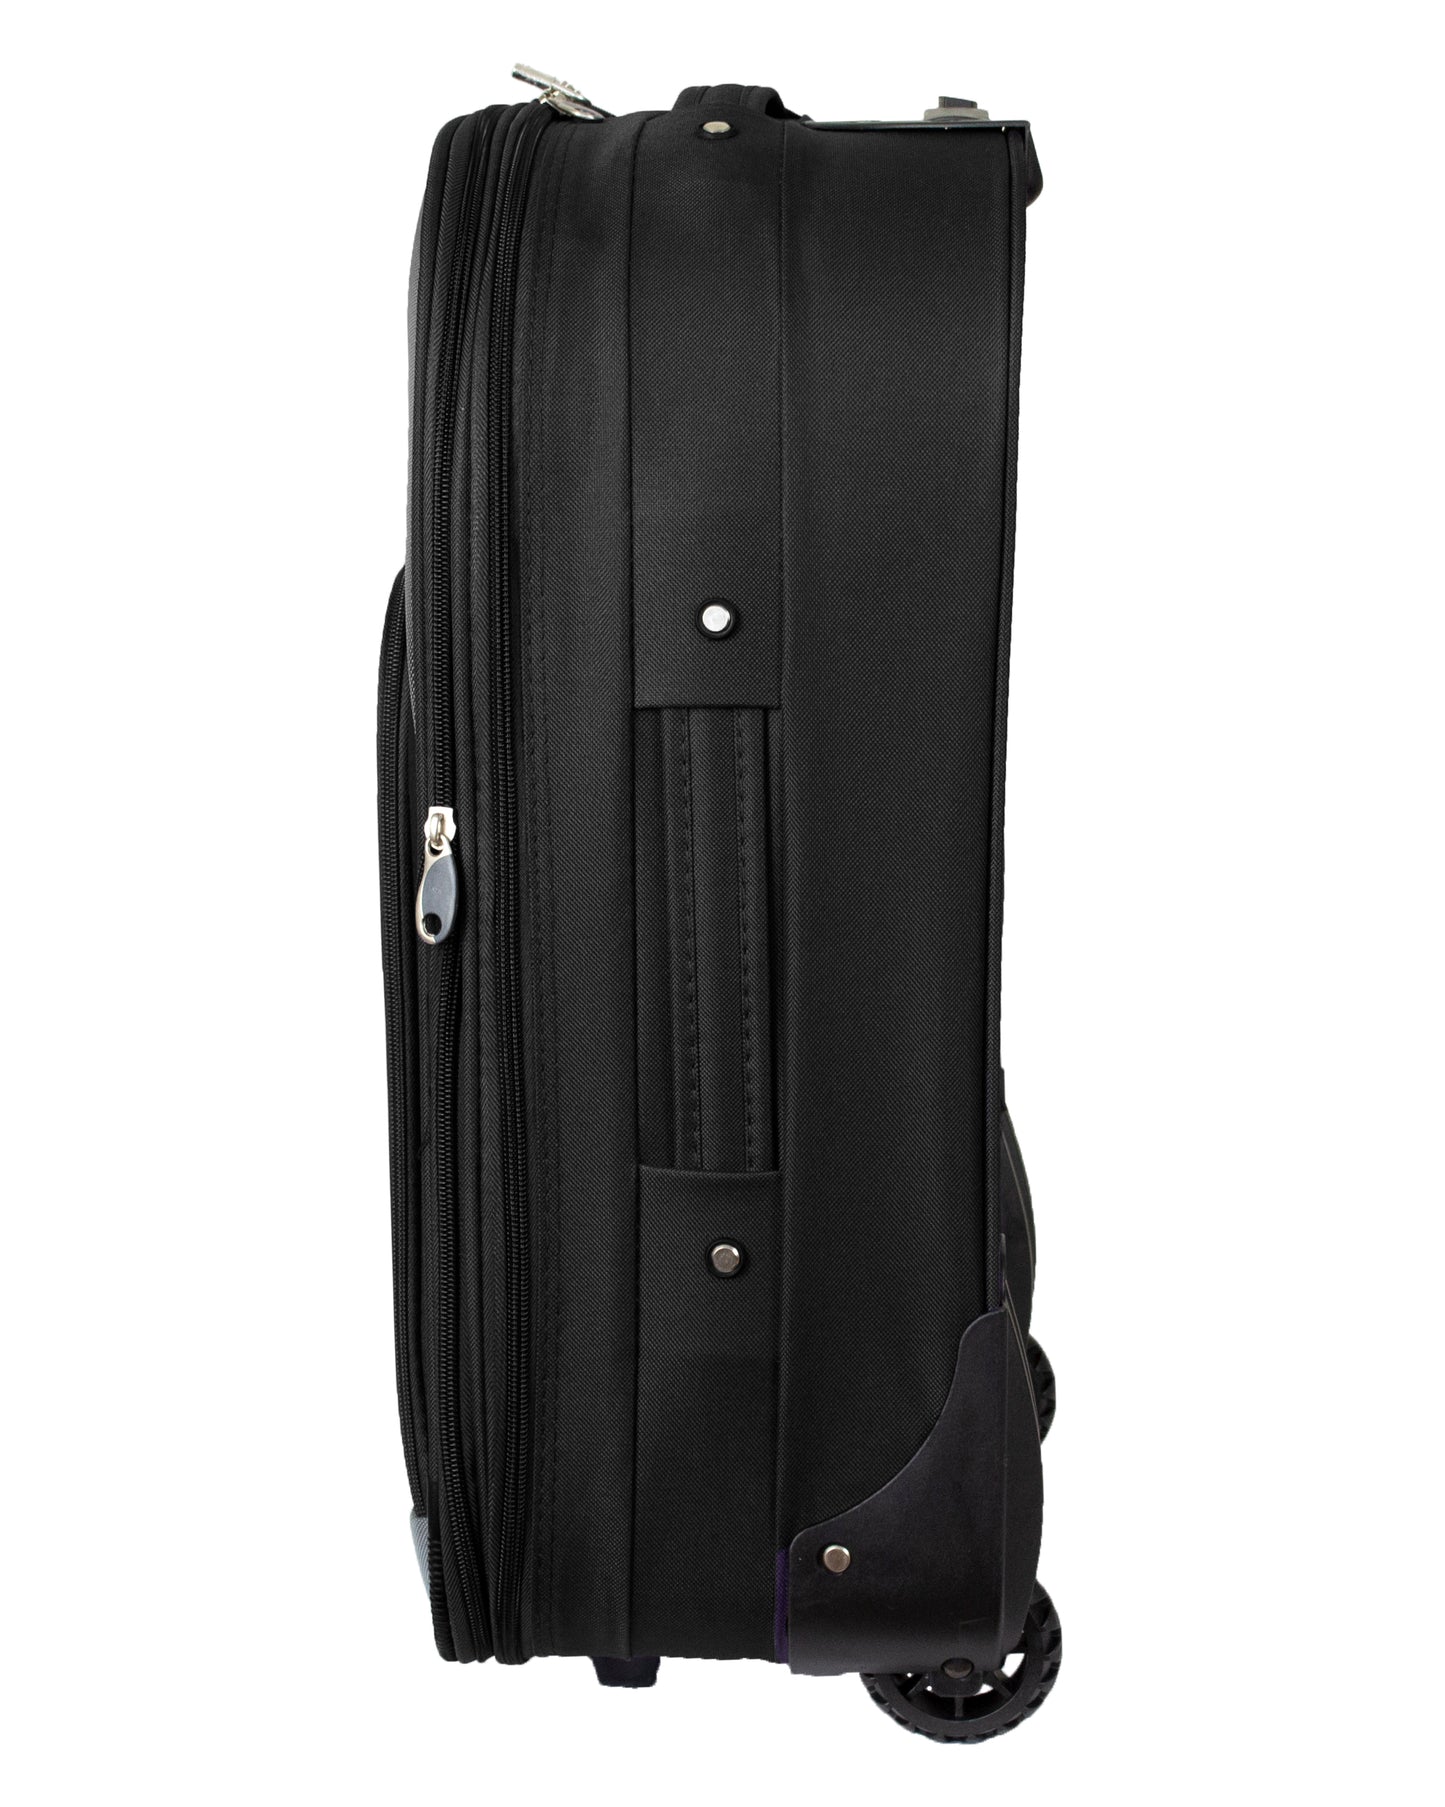 2 Wheels Soft Case Luggage Black